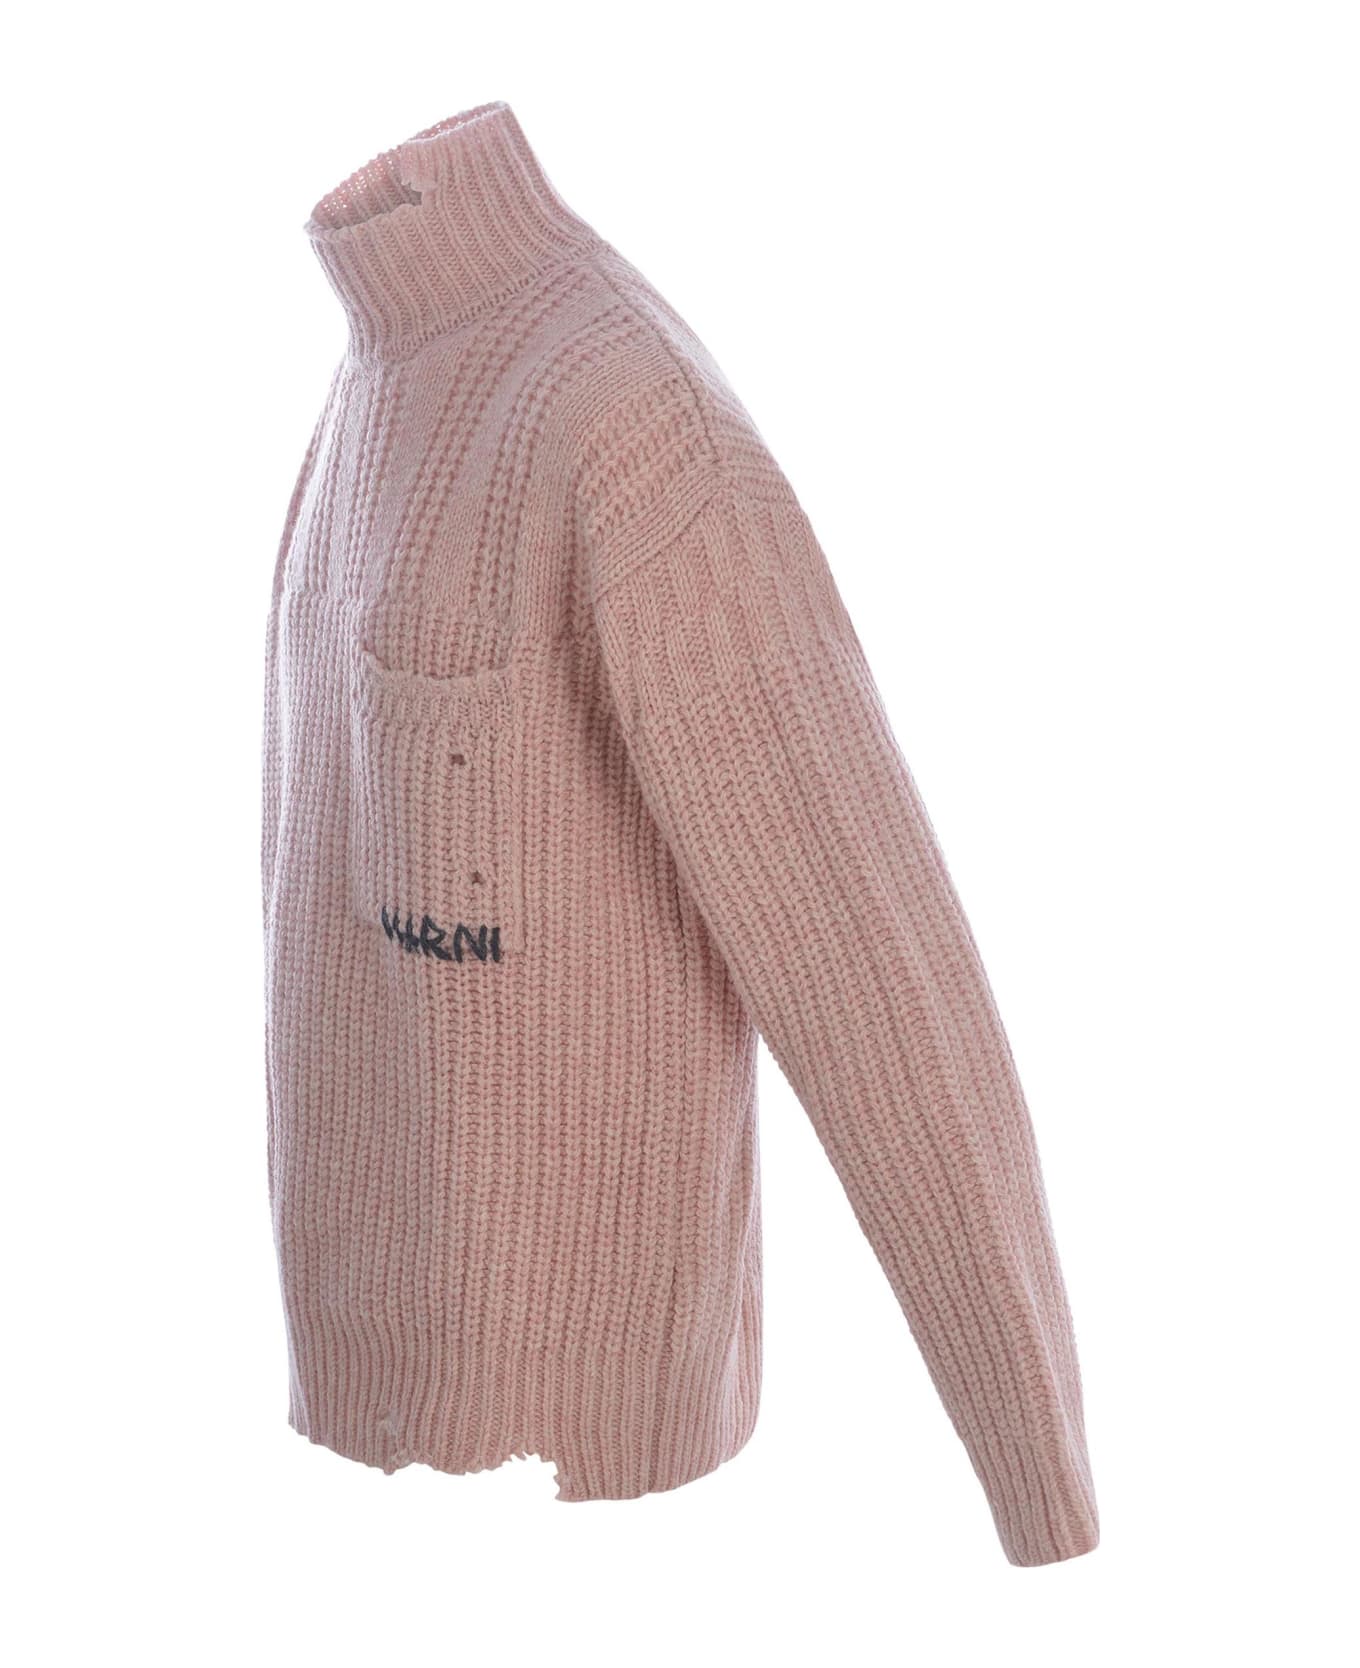 Marni Sweater Marni Made Of Virgin Wool - Rosa